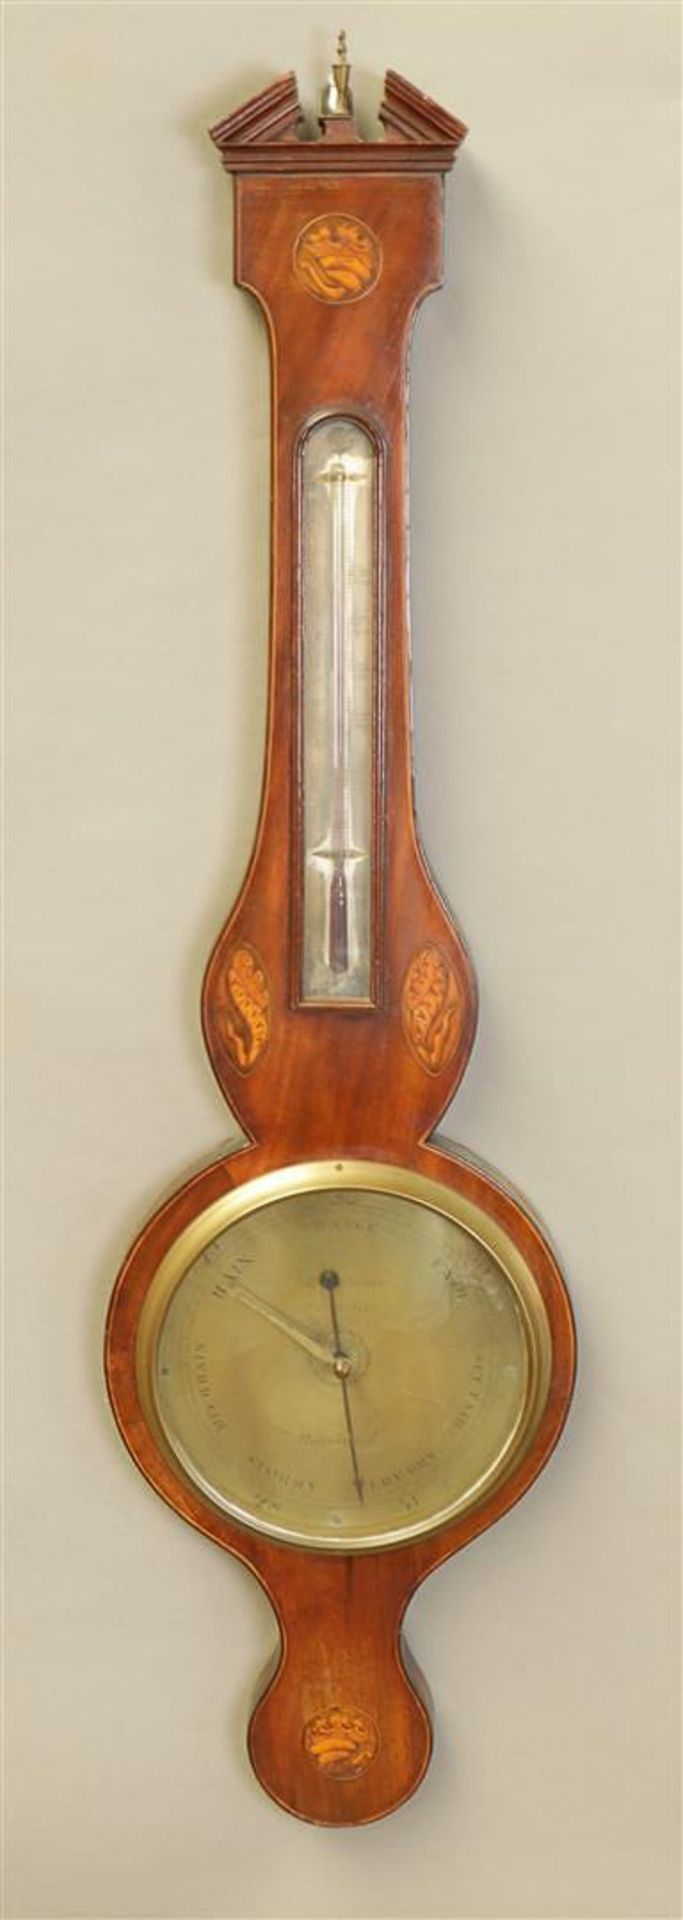 An English banjo barometer with intarsia. 19th century.